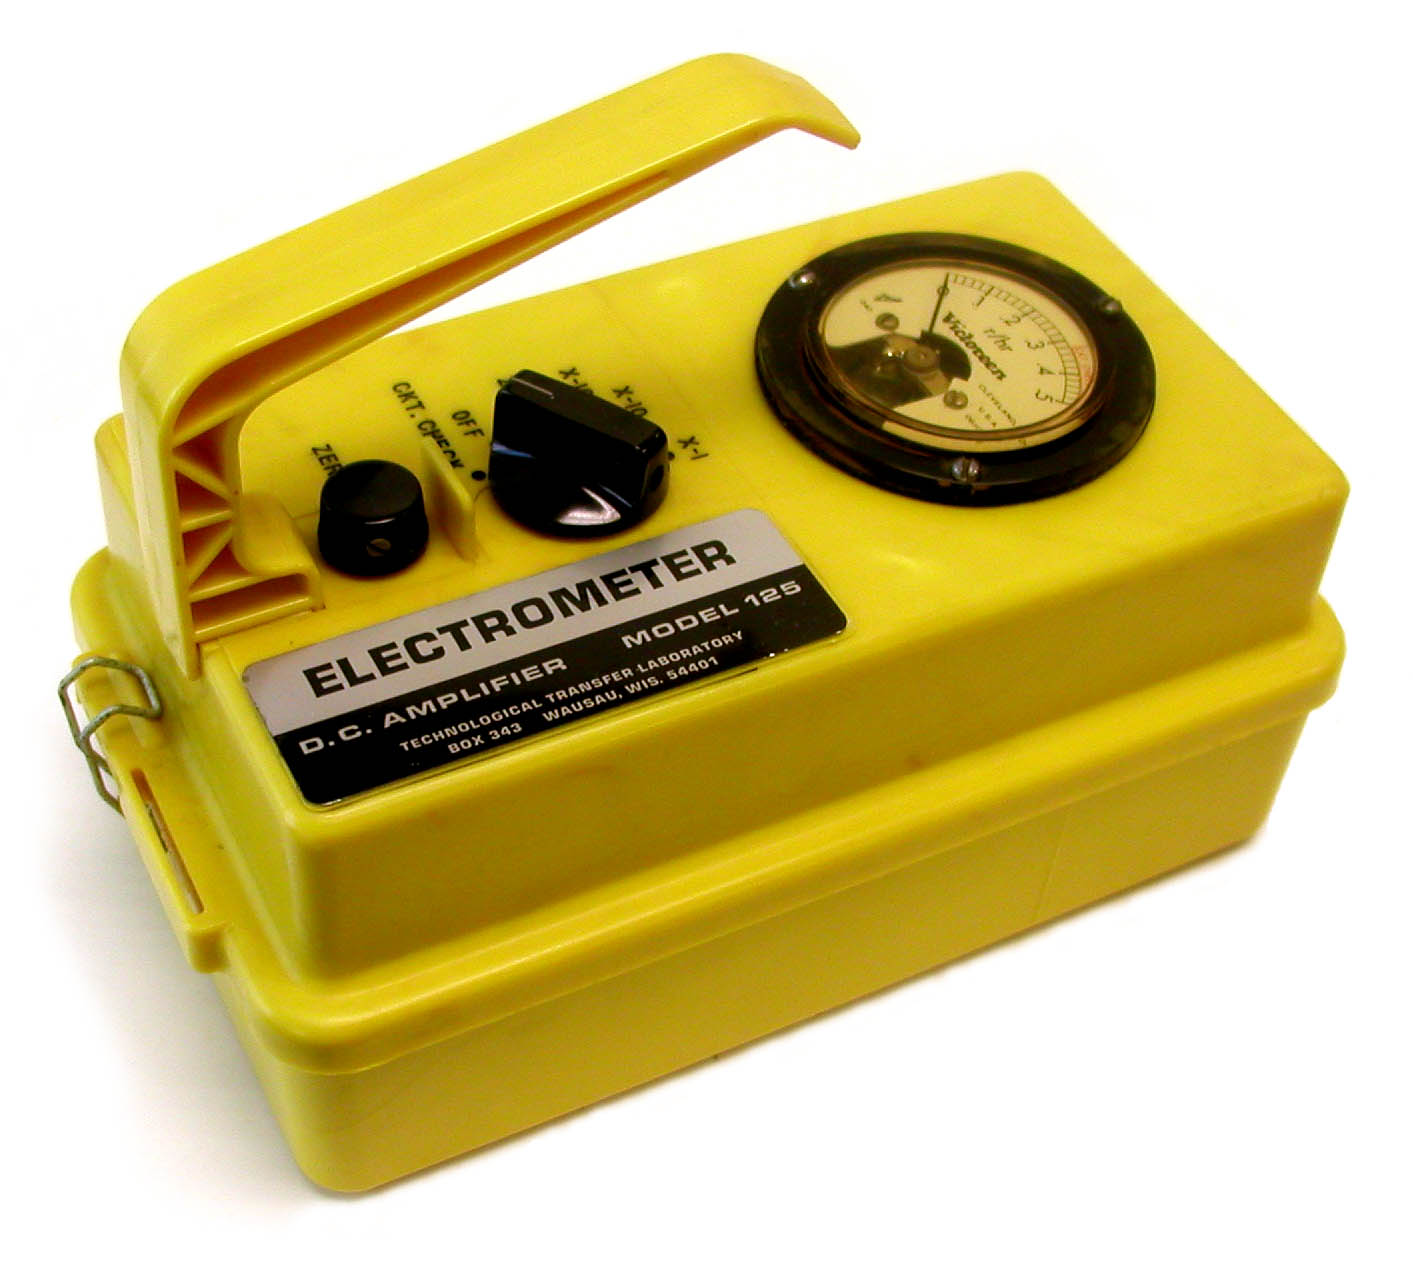 Technological Transfer Laboratory Model 125 Electrometer